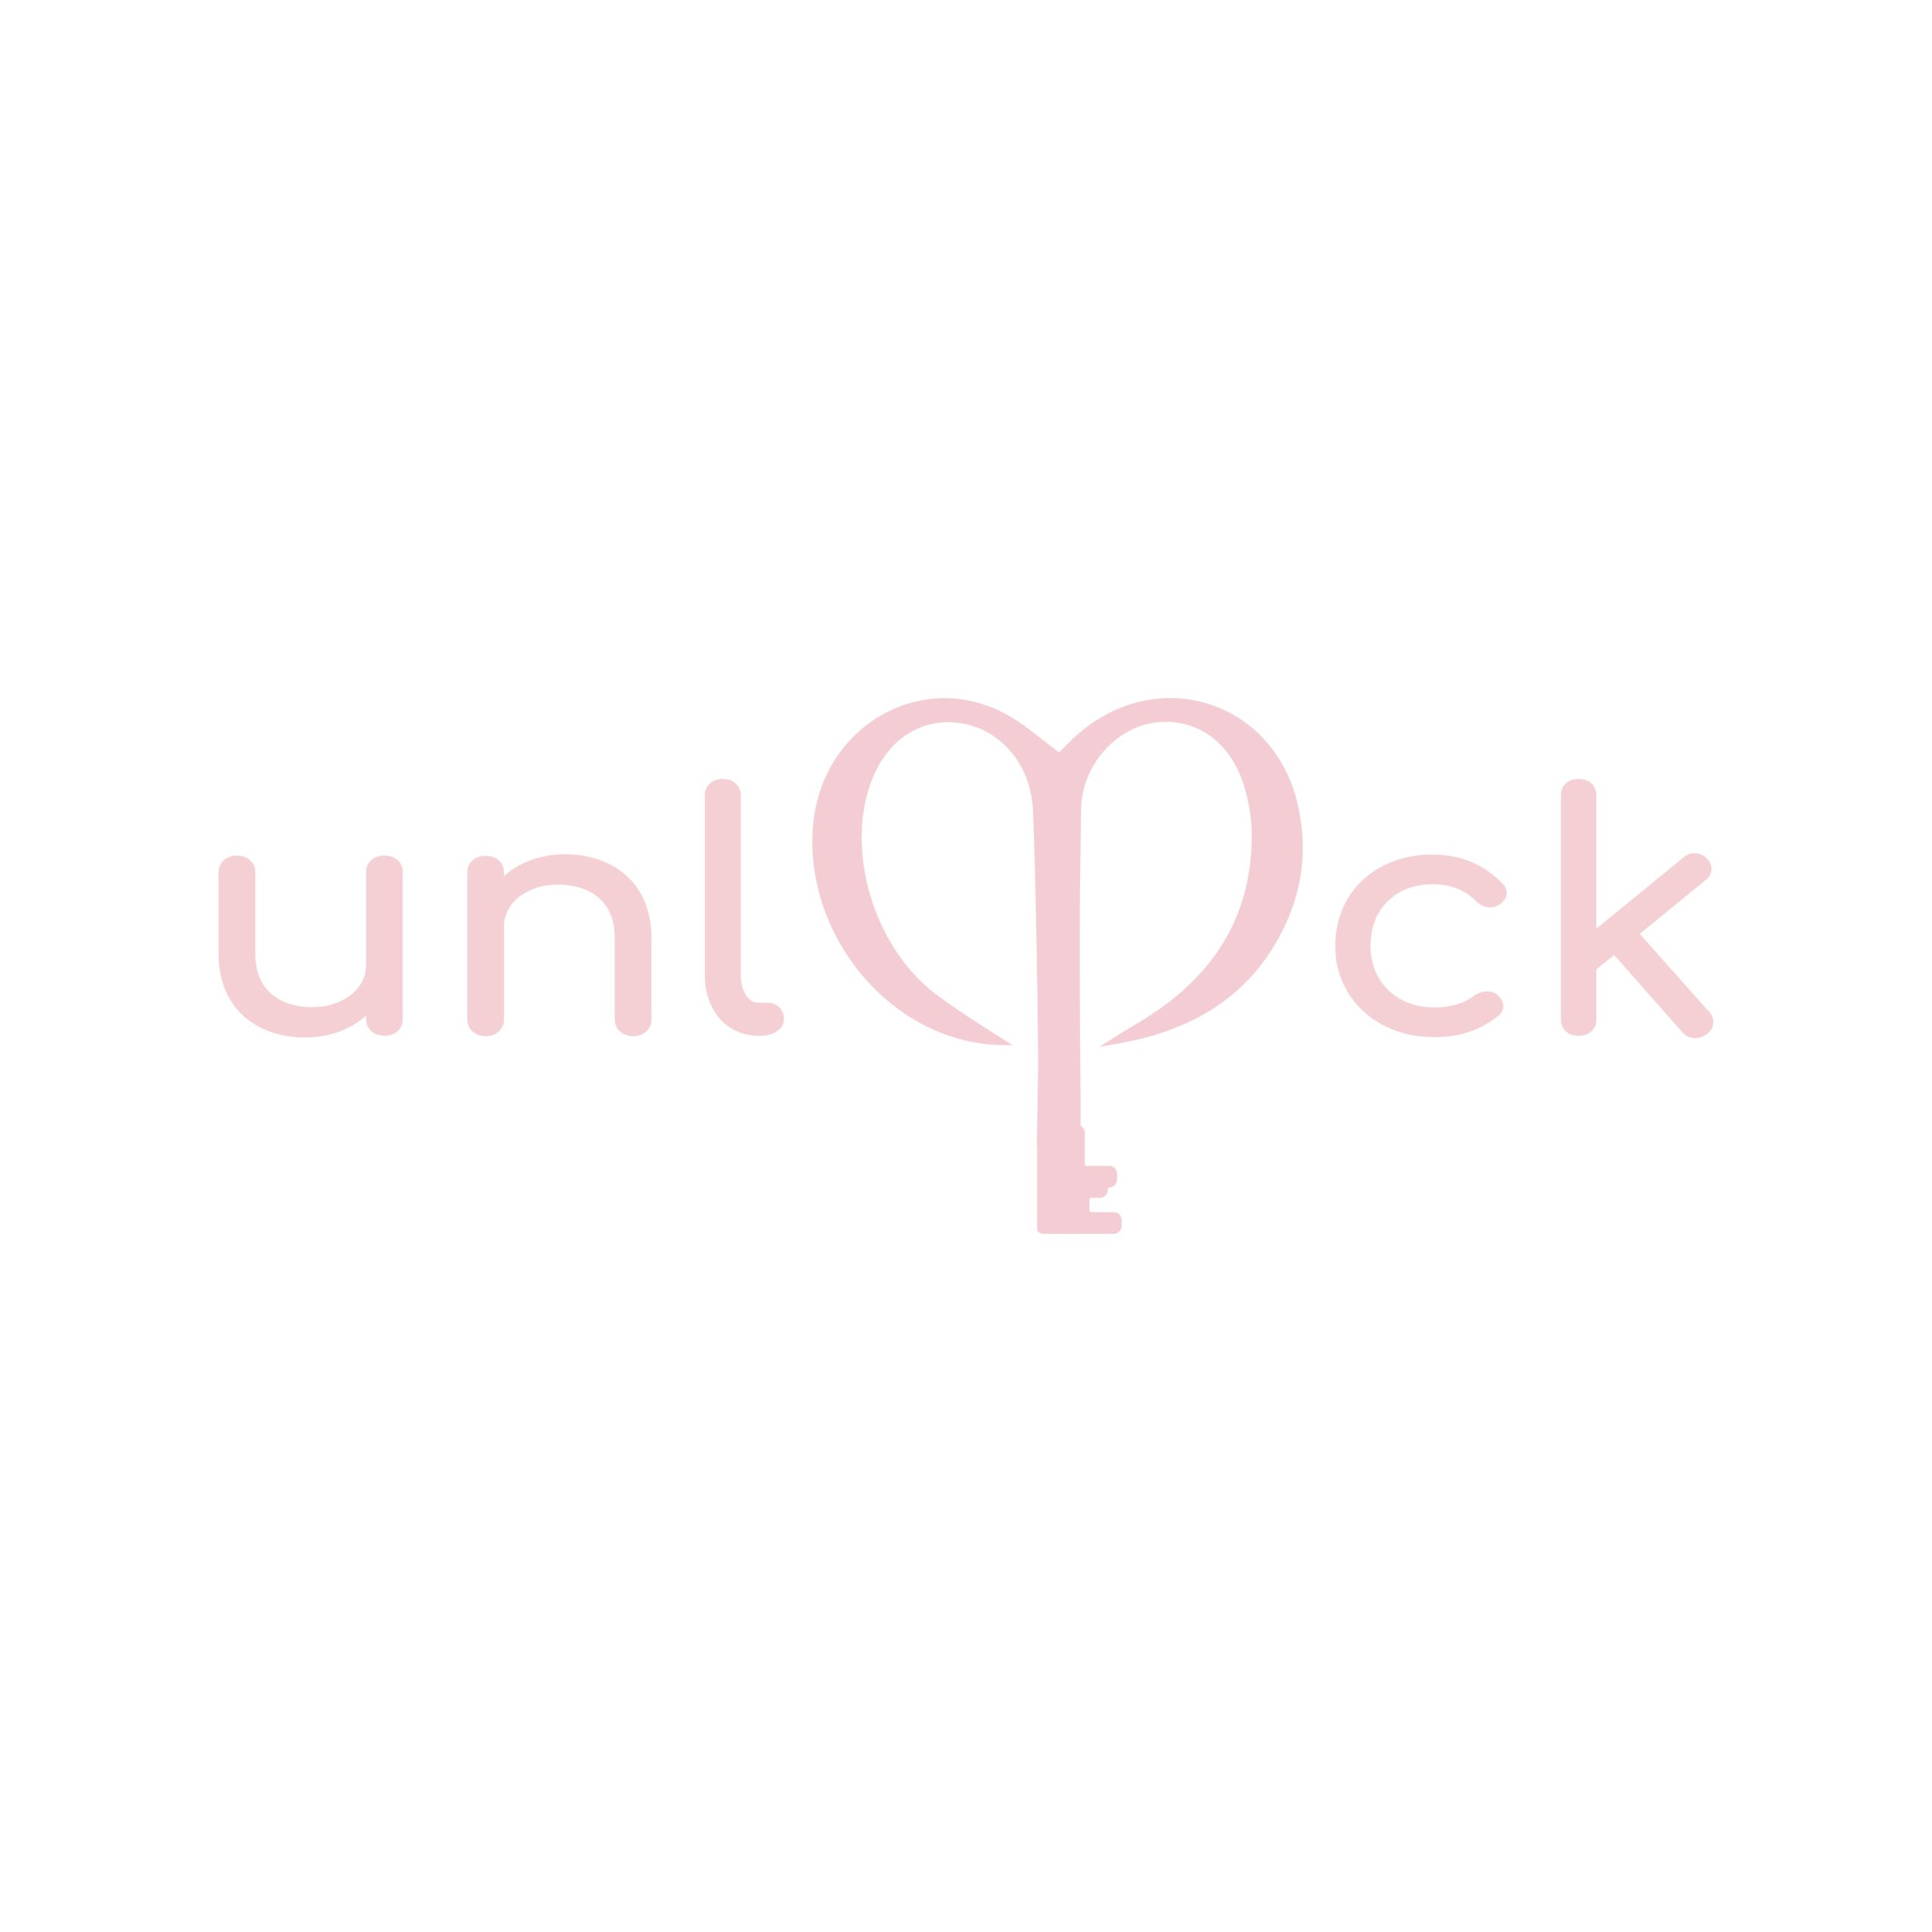 Unlock - logo1000x1000